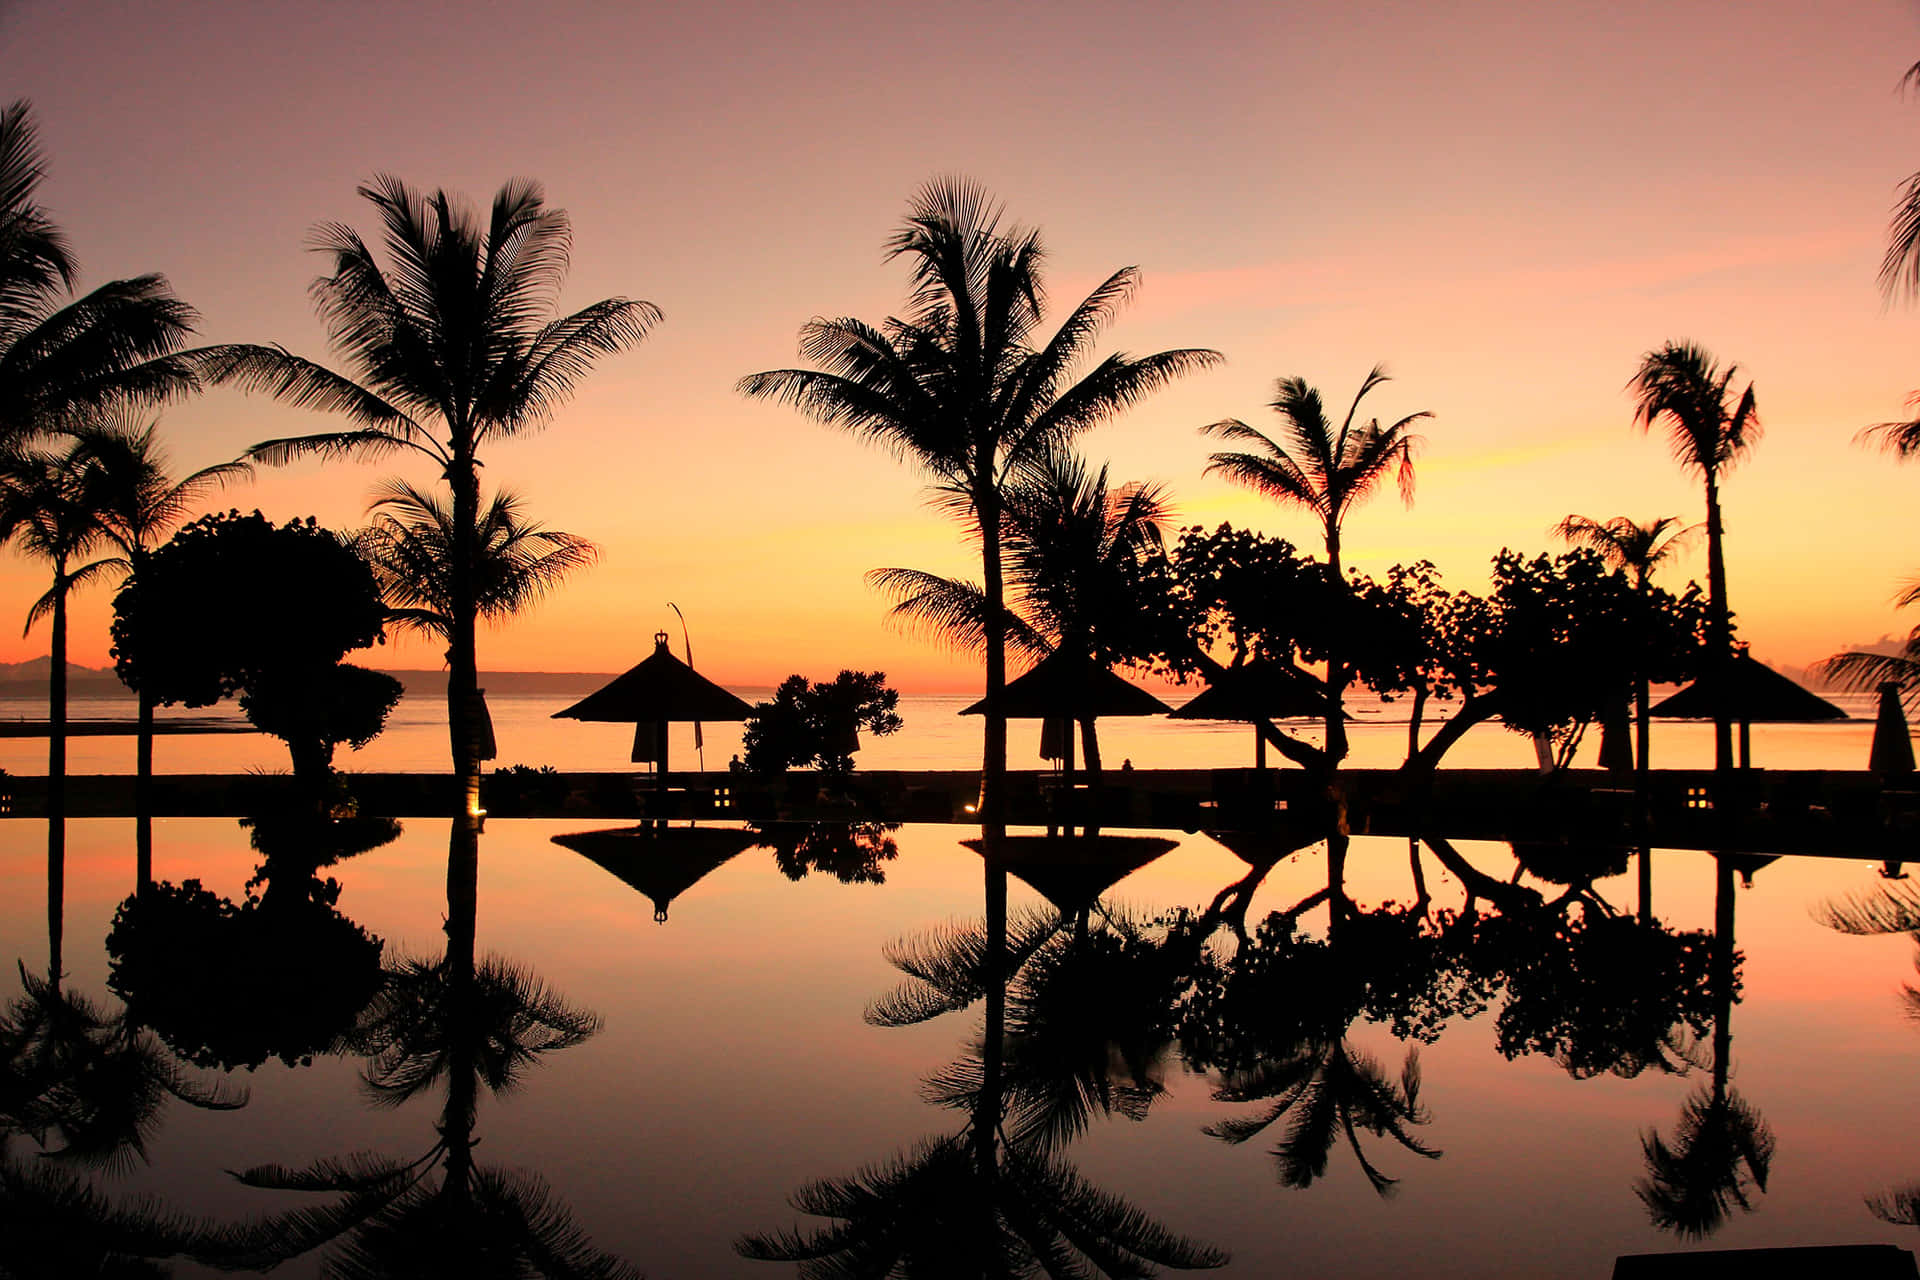 Bali - A Truly Magical Dream Destination